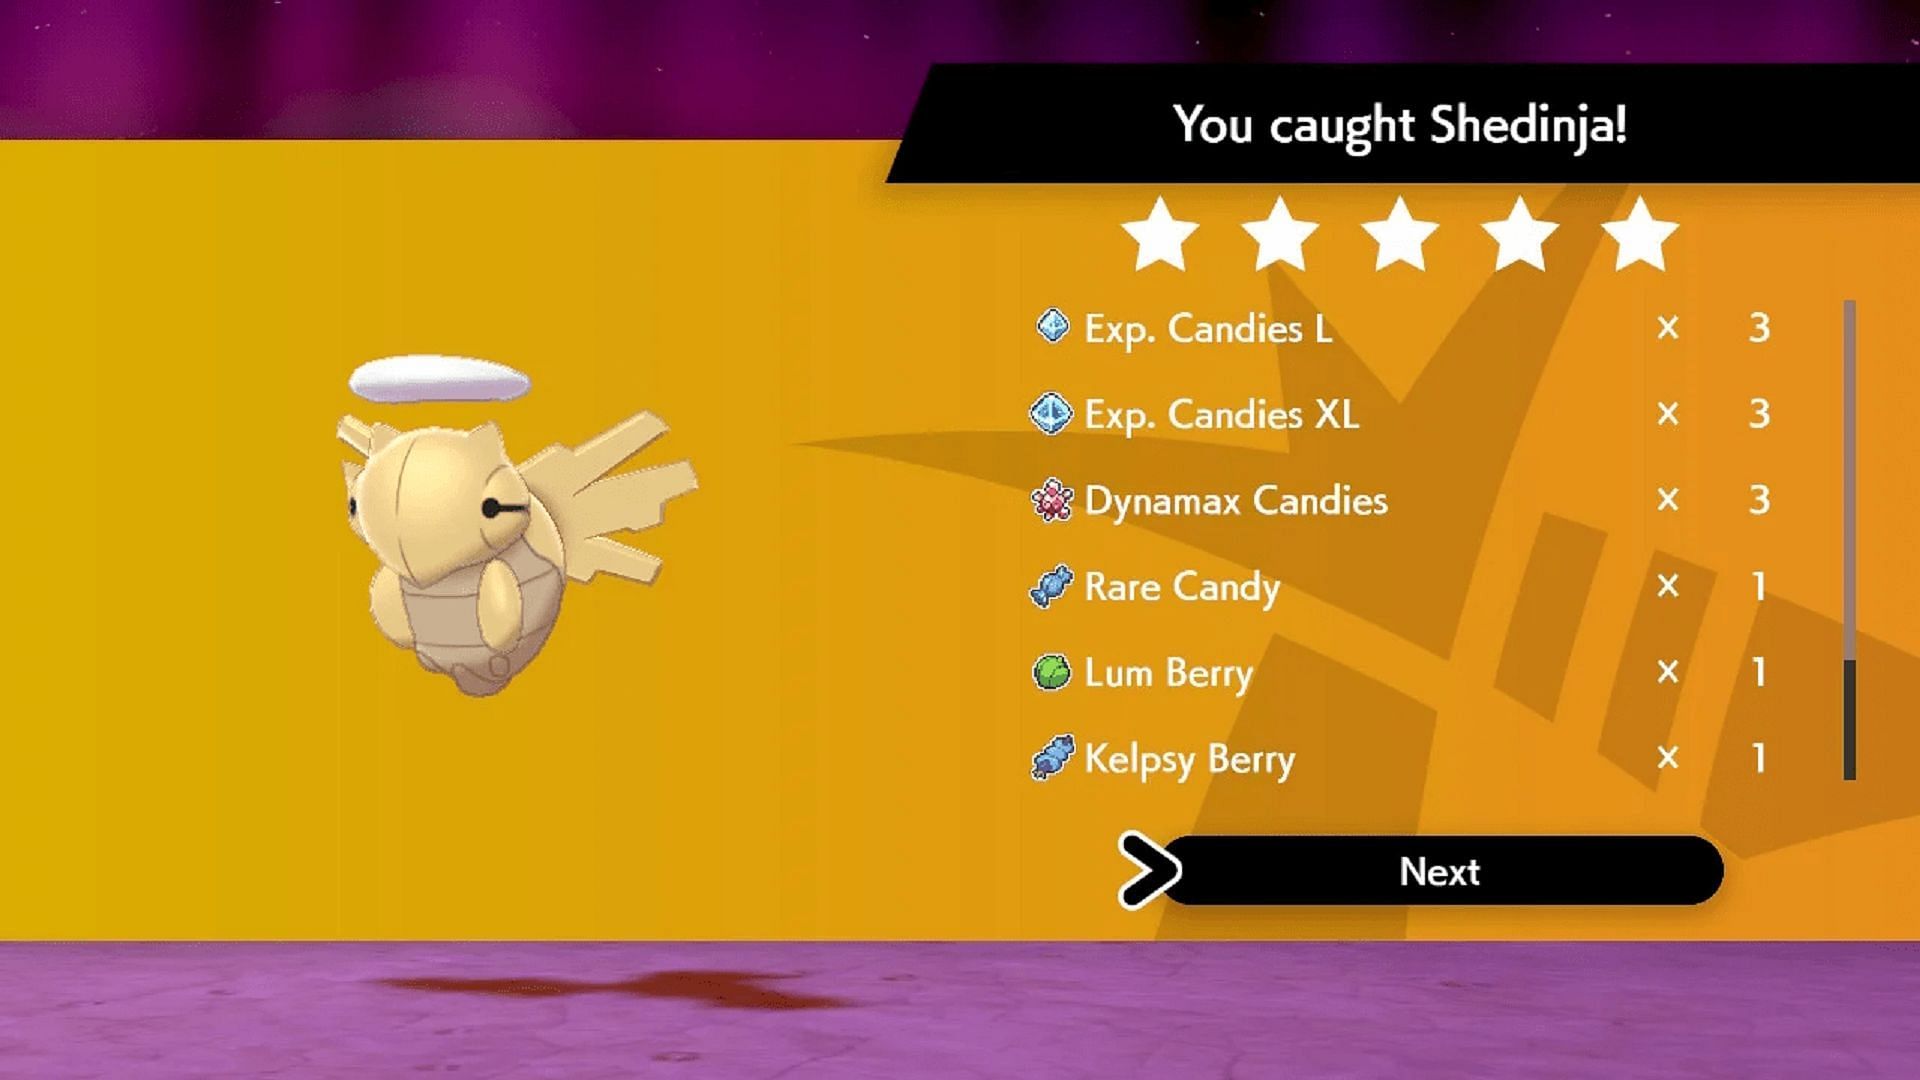 Can you catch shiny Shedinja in Pokemon GO?